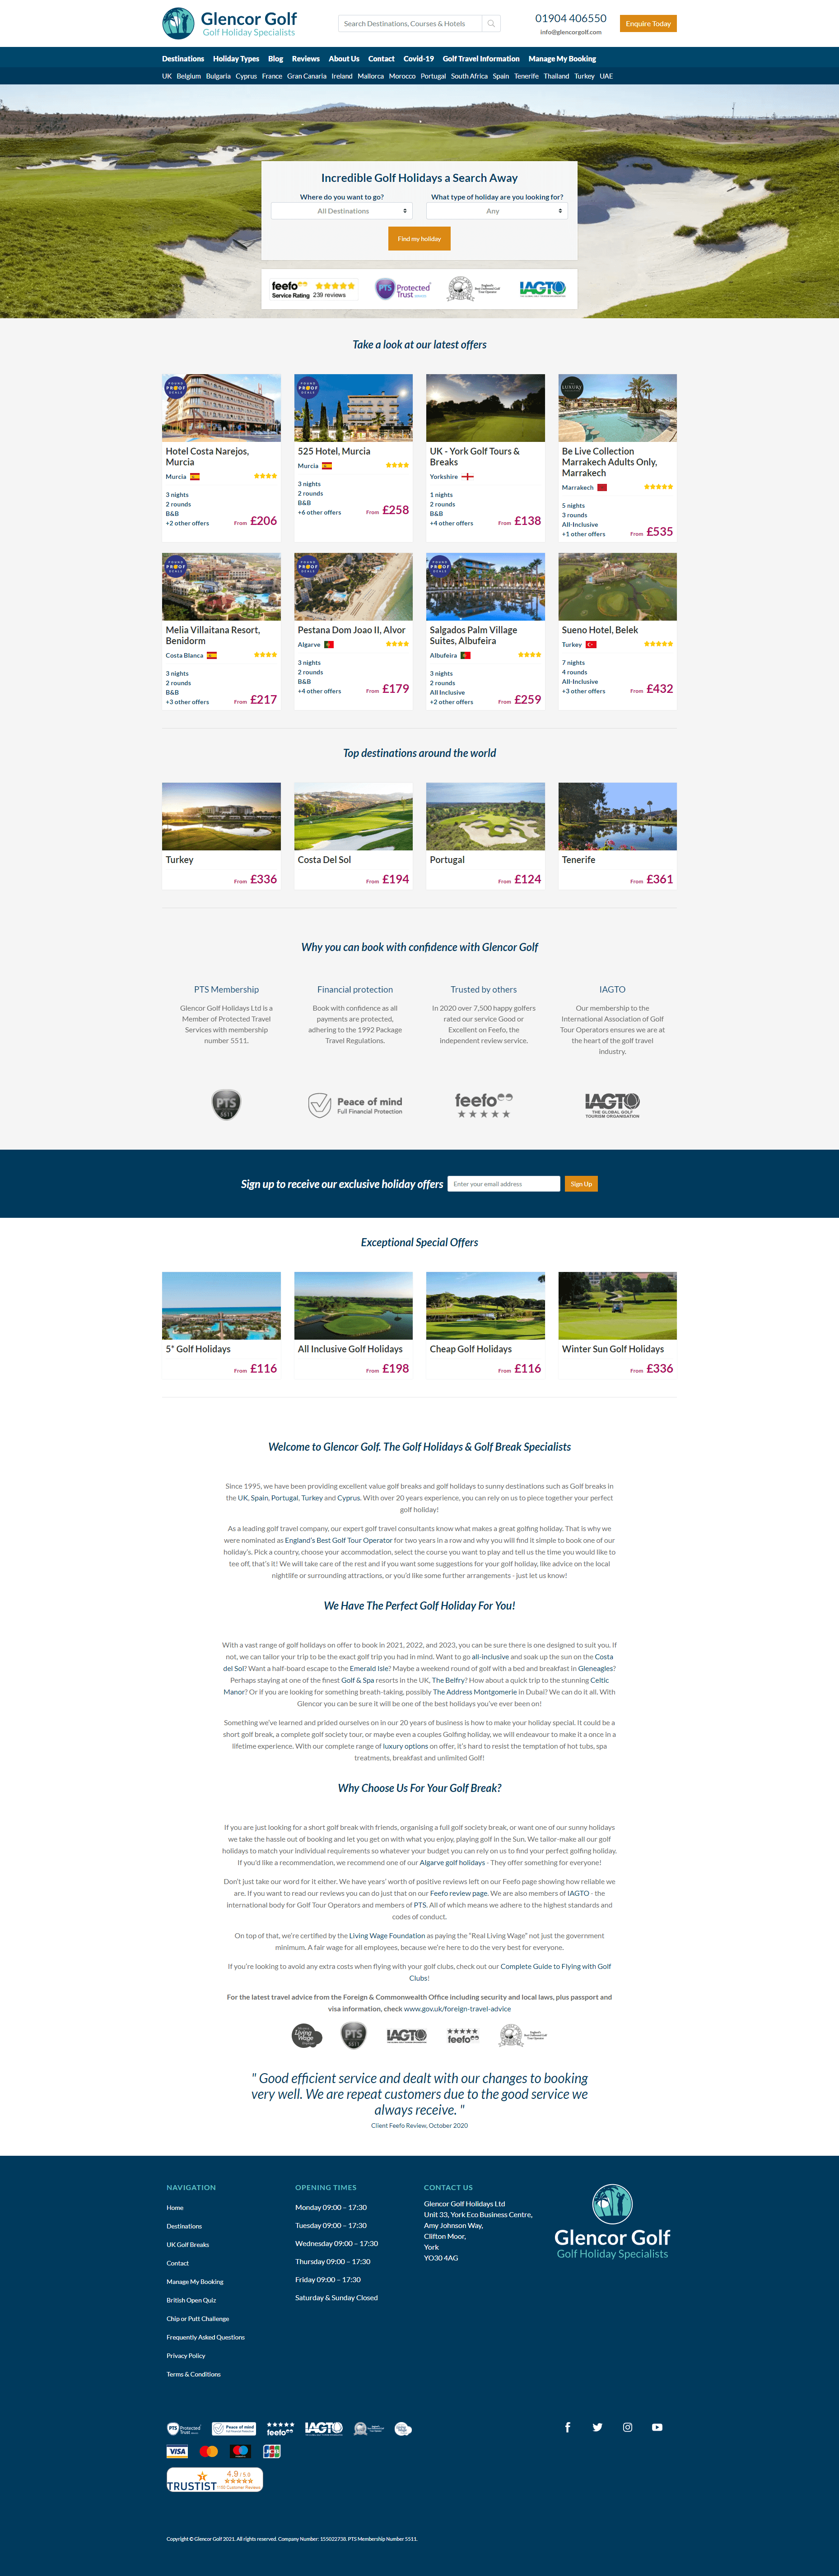 Glencor Golf SEO Case Study Website